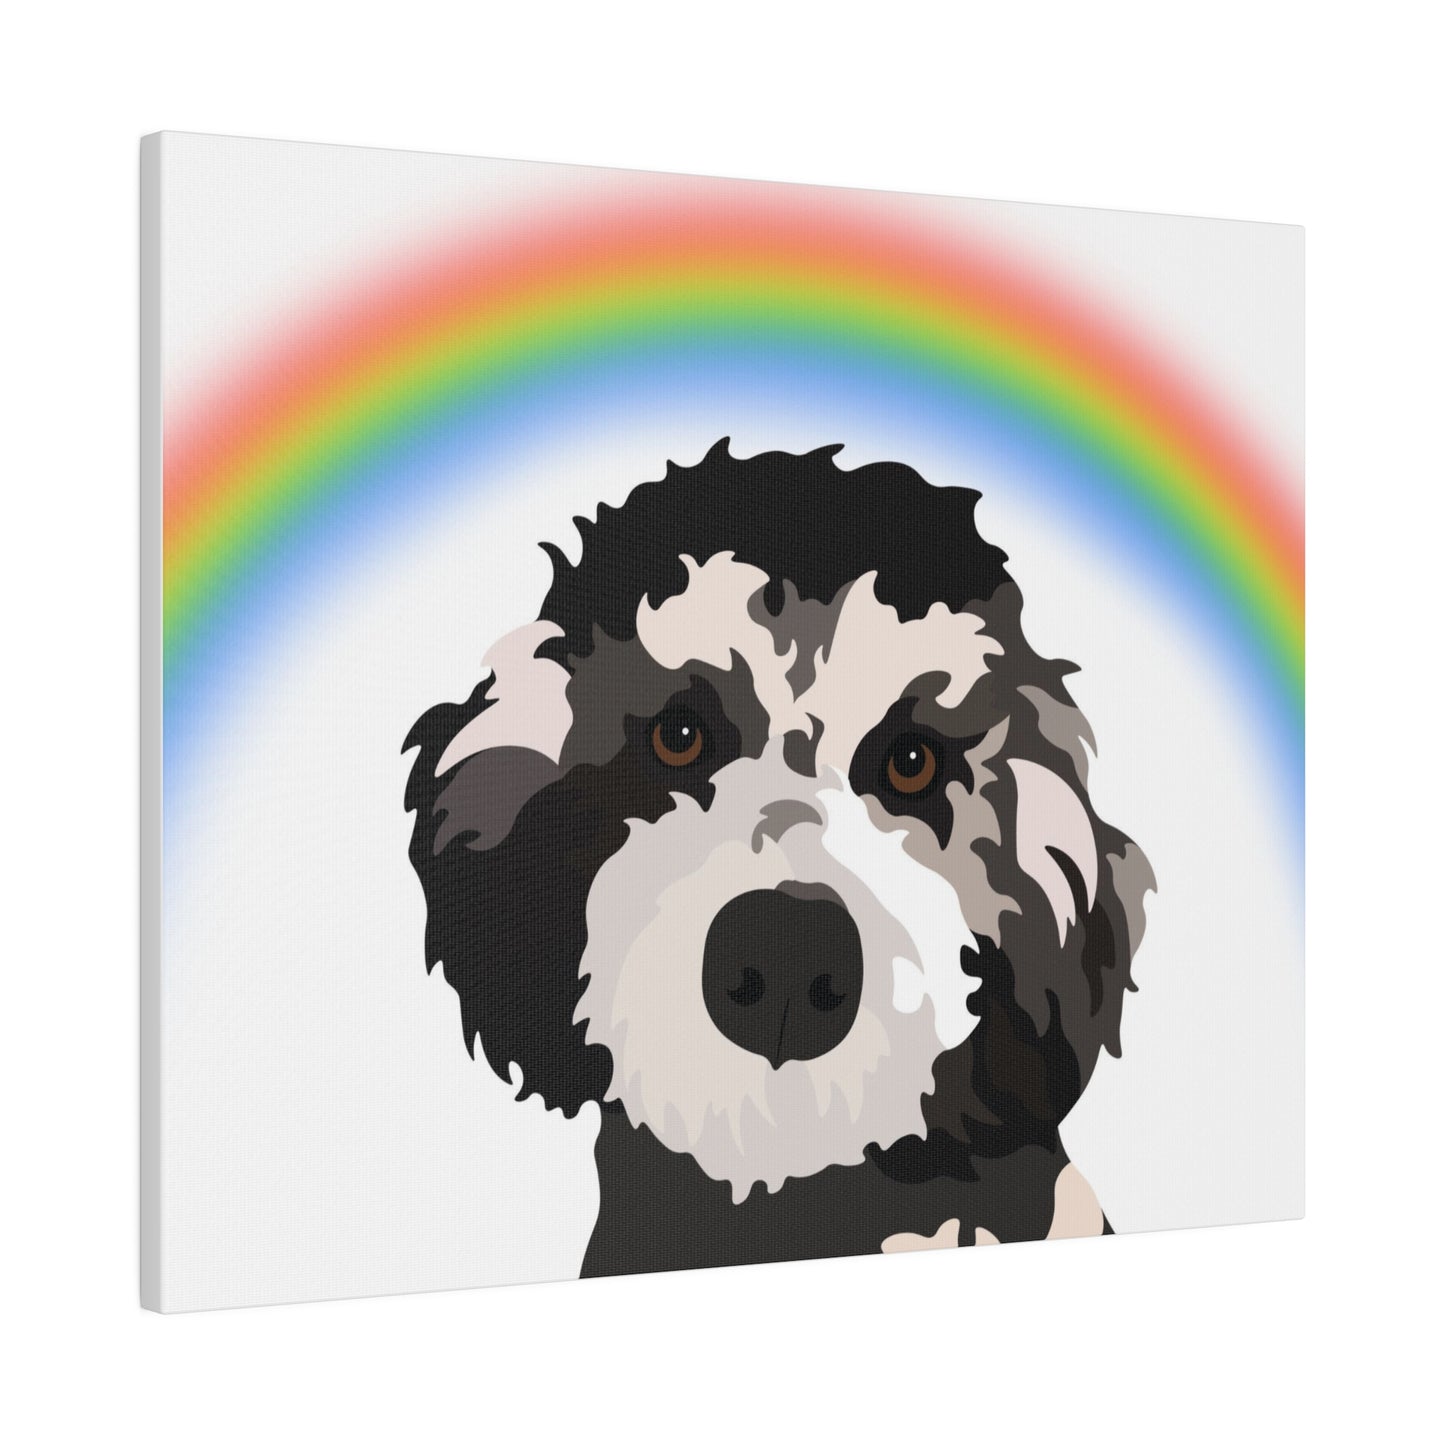 One Pet Portrait on Canvas | Rainbow Bridge Background | Custom Hand-Drawn Pet Portrait in Cartoon-Realism Style